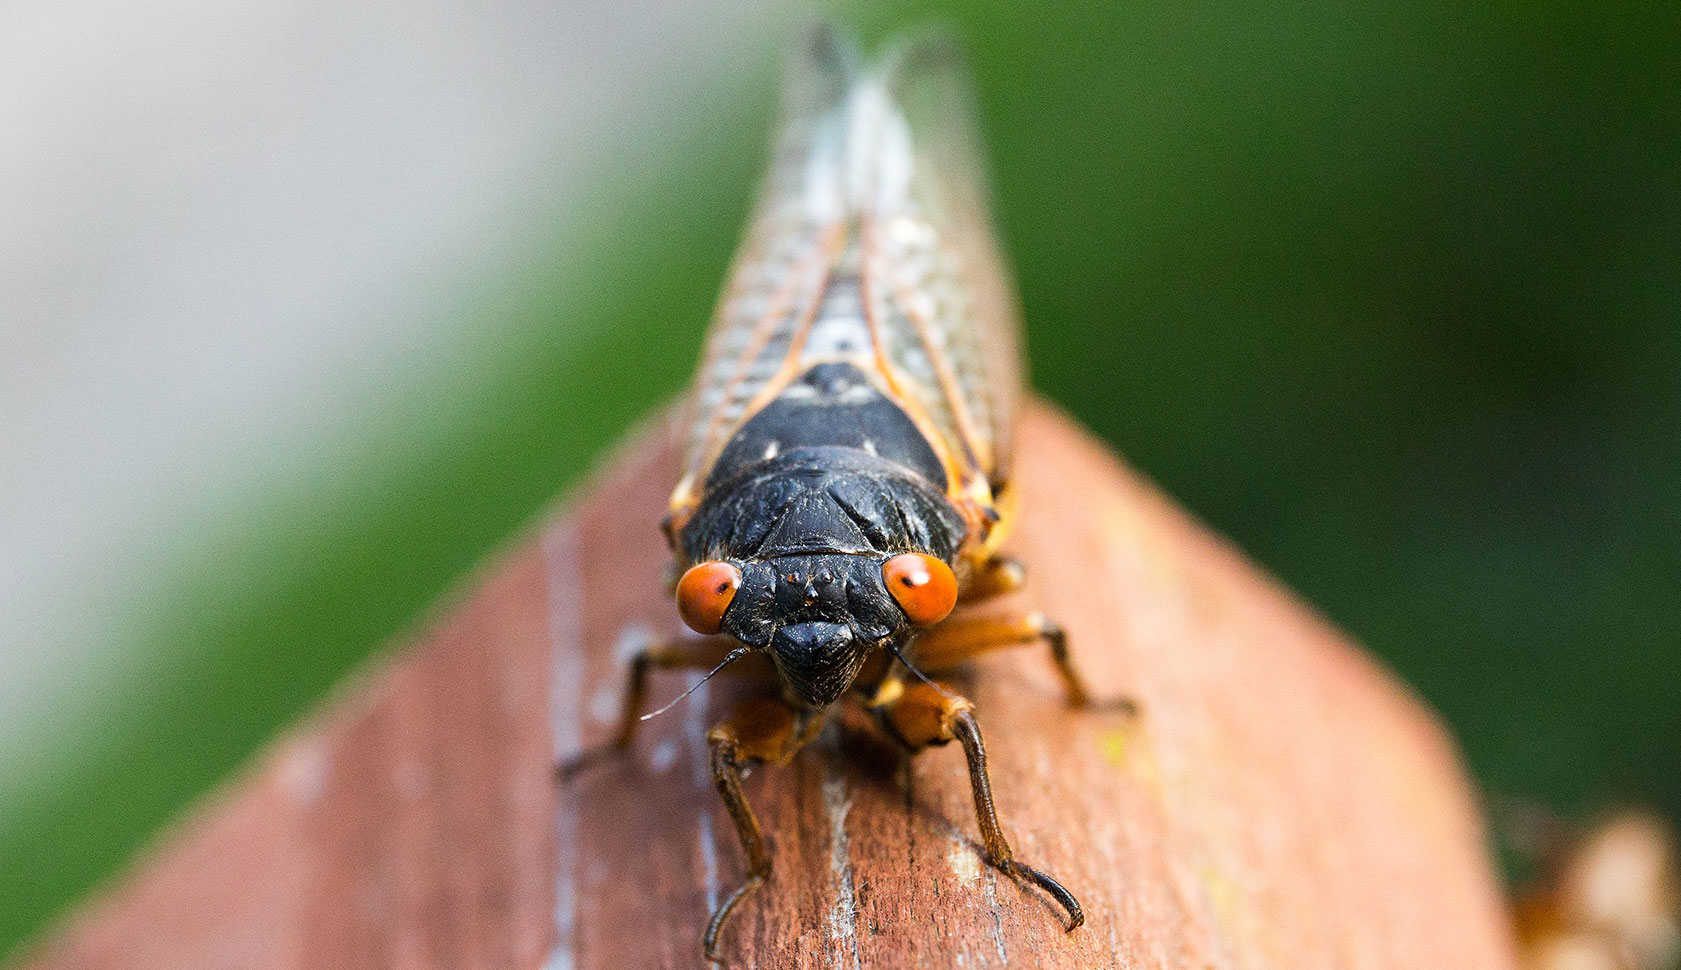 cicada on a piece of wood